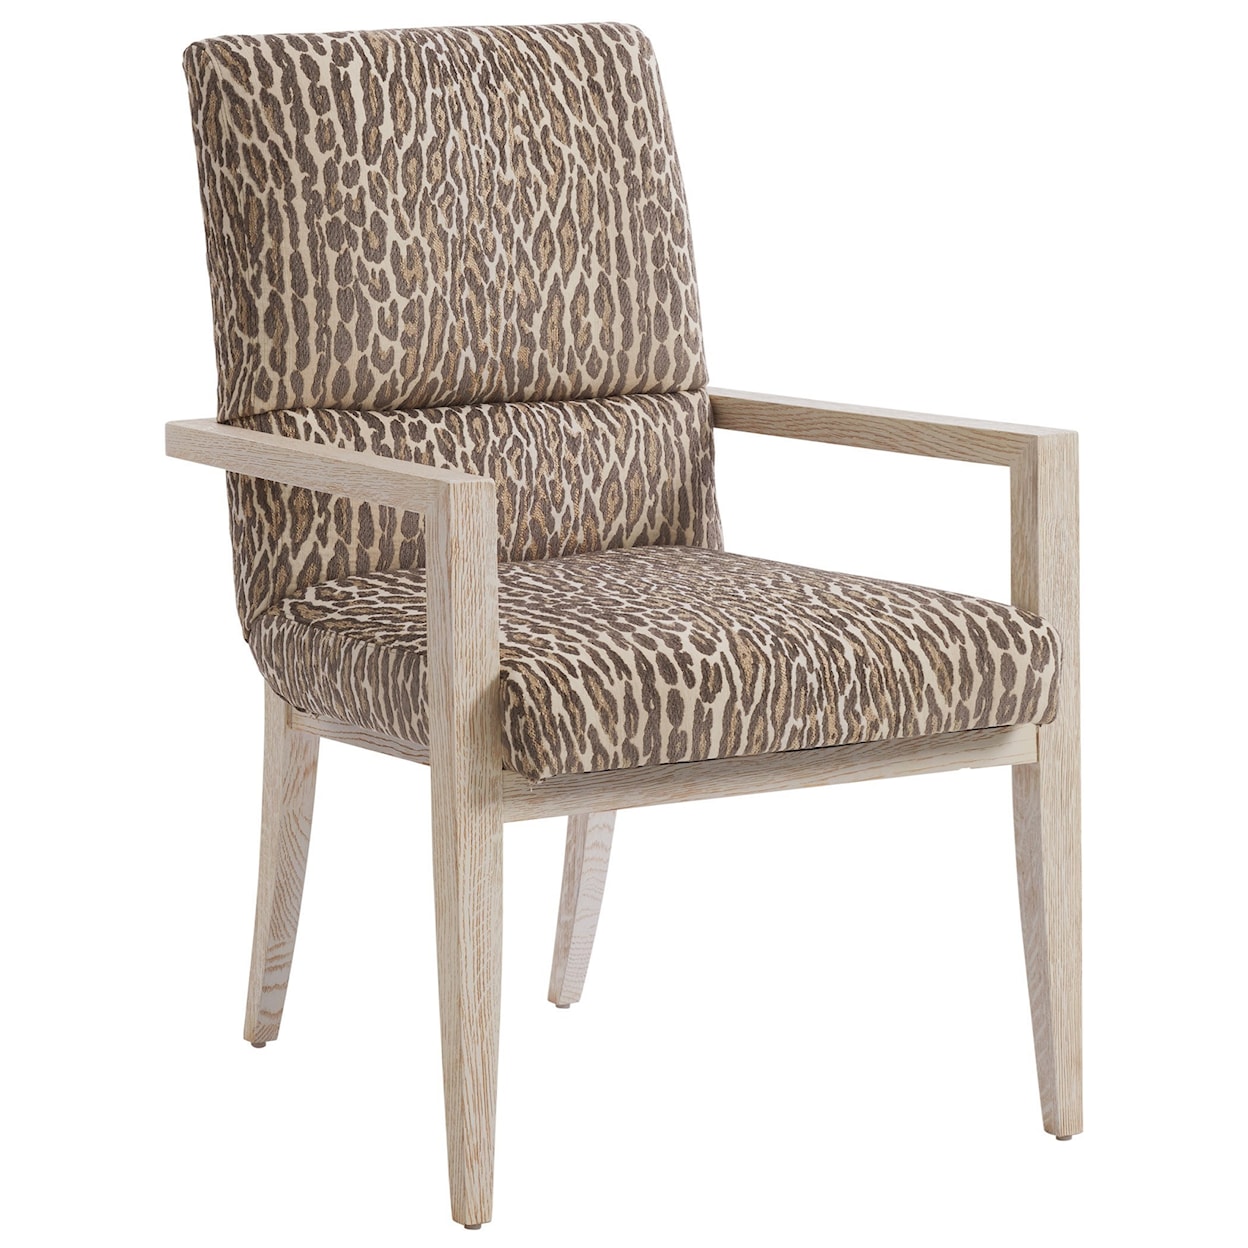 Barclay Butera Carmel Palmero Upholstered Arm Chair